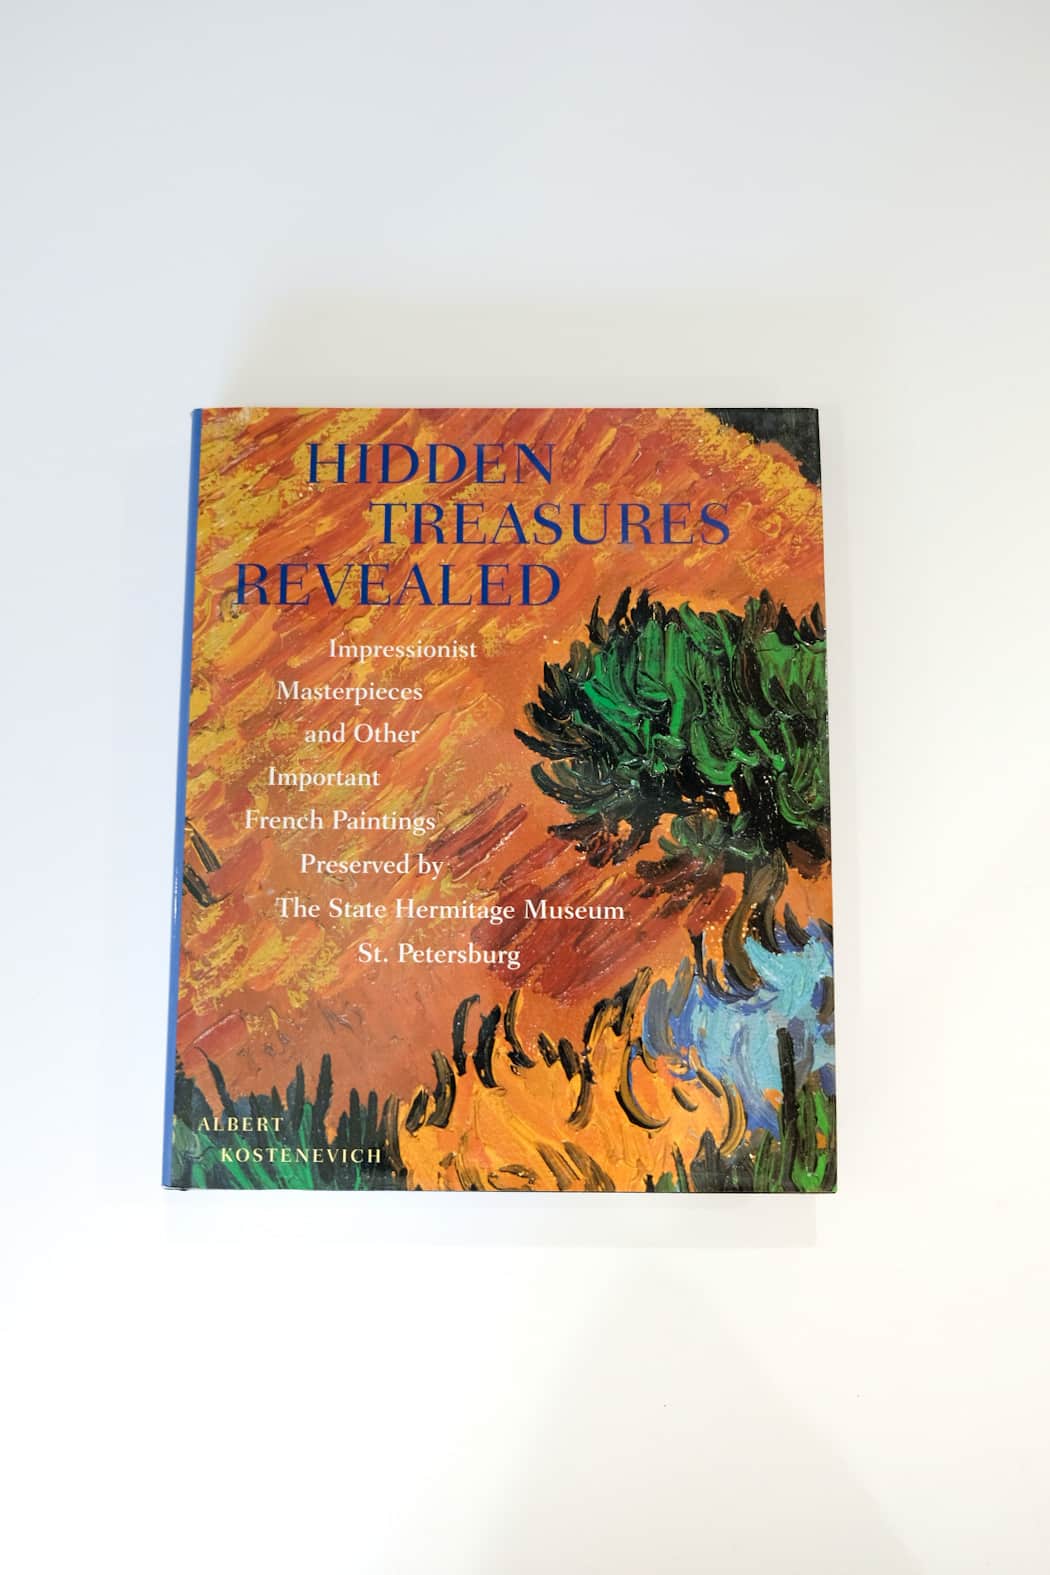 Hidden Treasures Revealed BY Albert Kostenevich